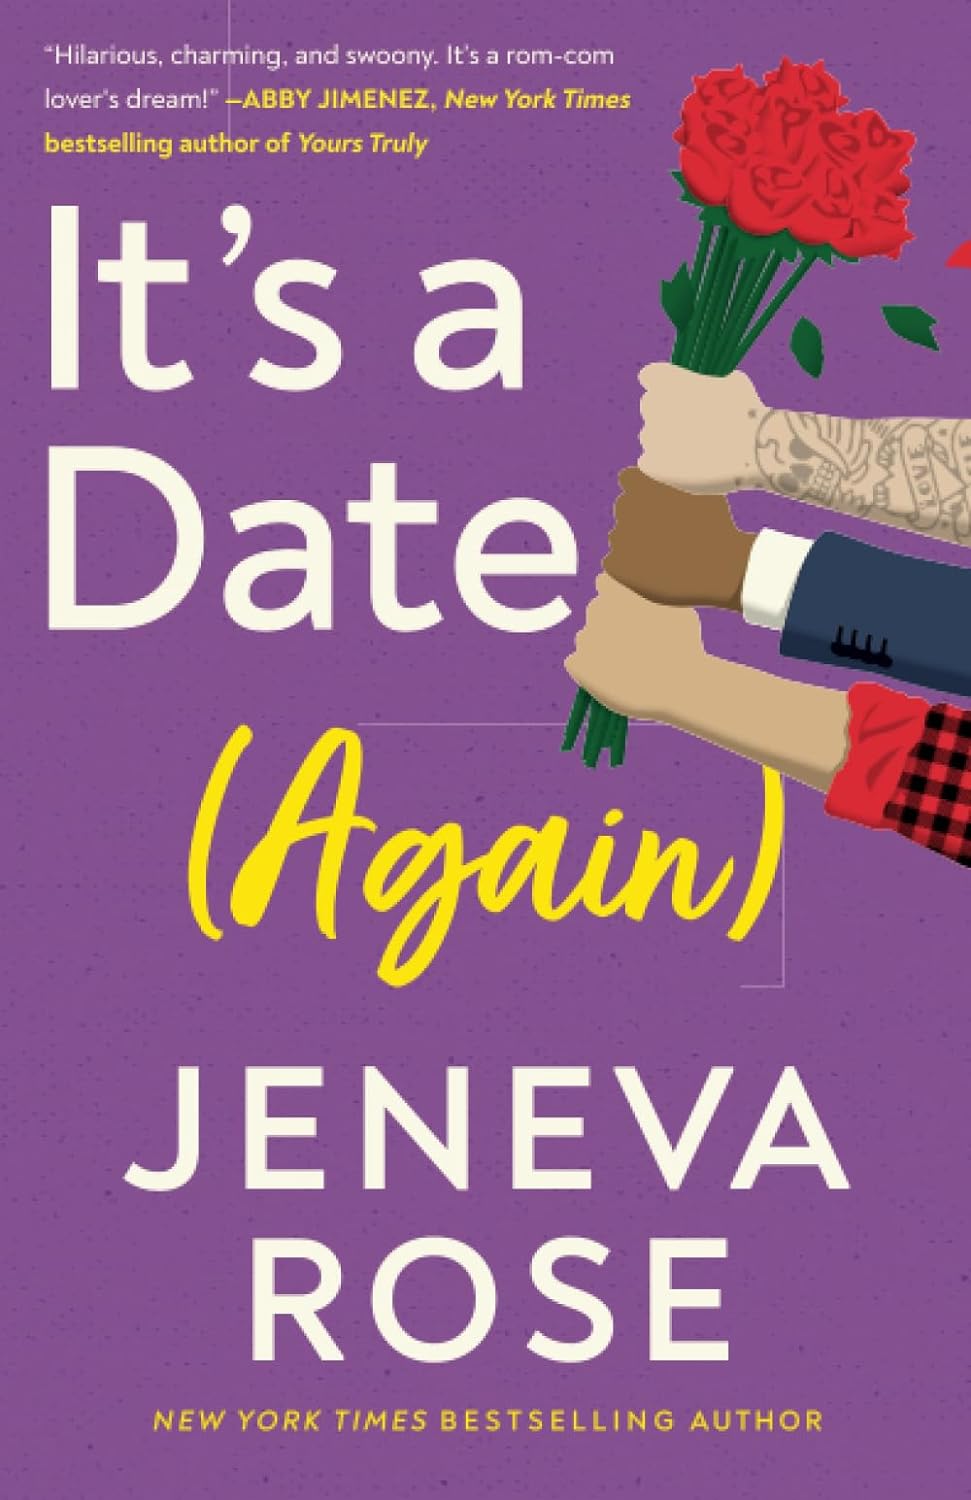 It's a Date (Again) - by Jeneva Rose